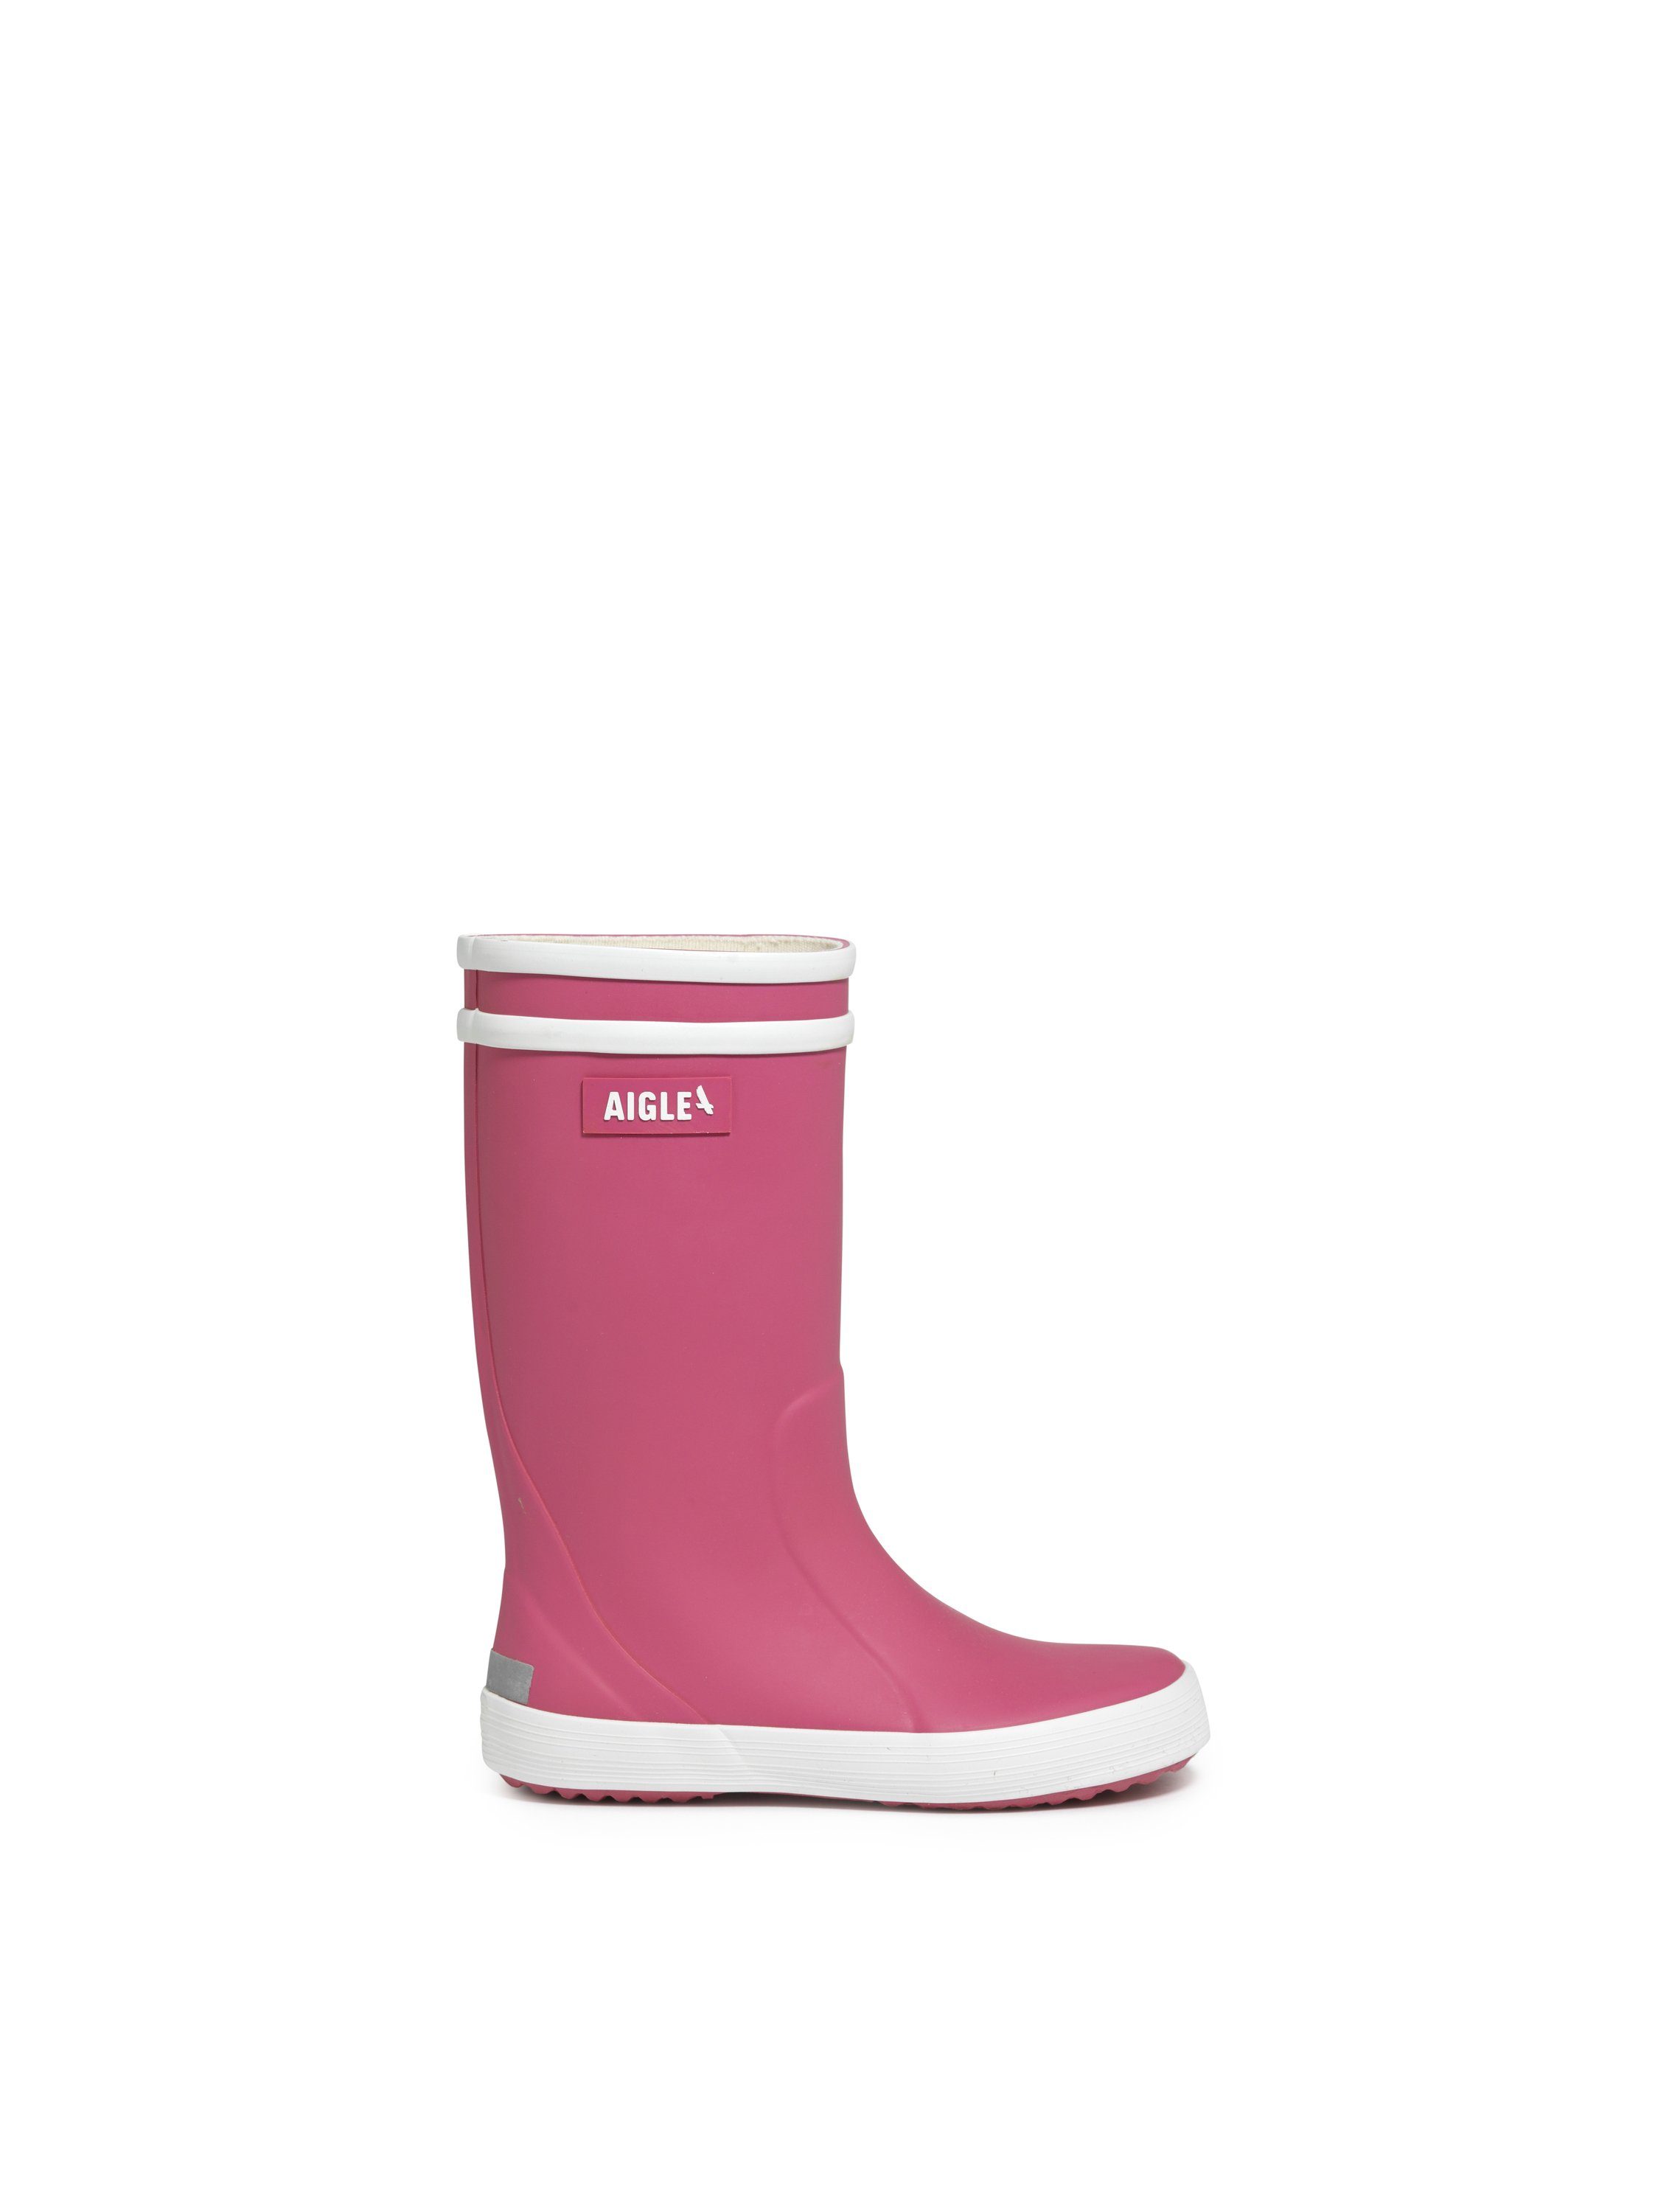 Aigle Regenstiefel Lolly-Pop 2 pink/weiß Gummistiefel